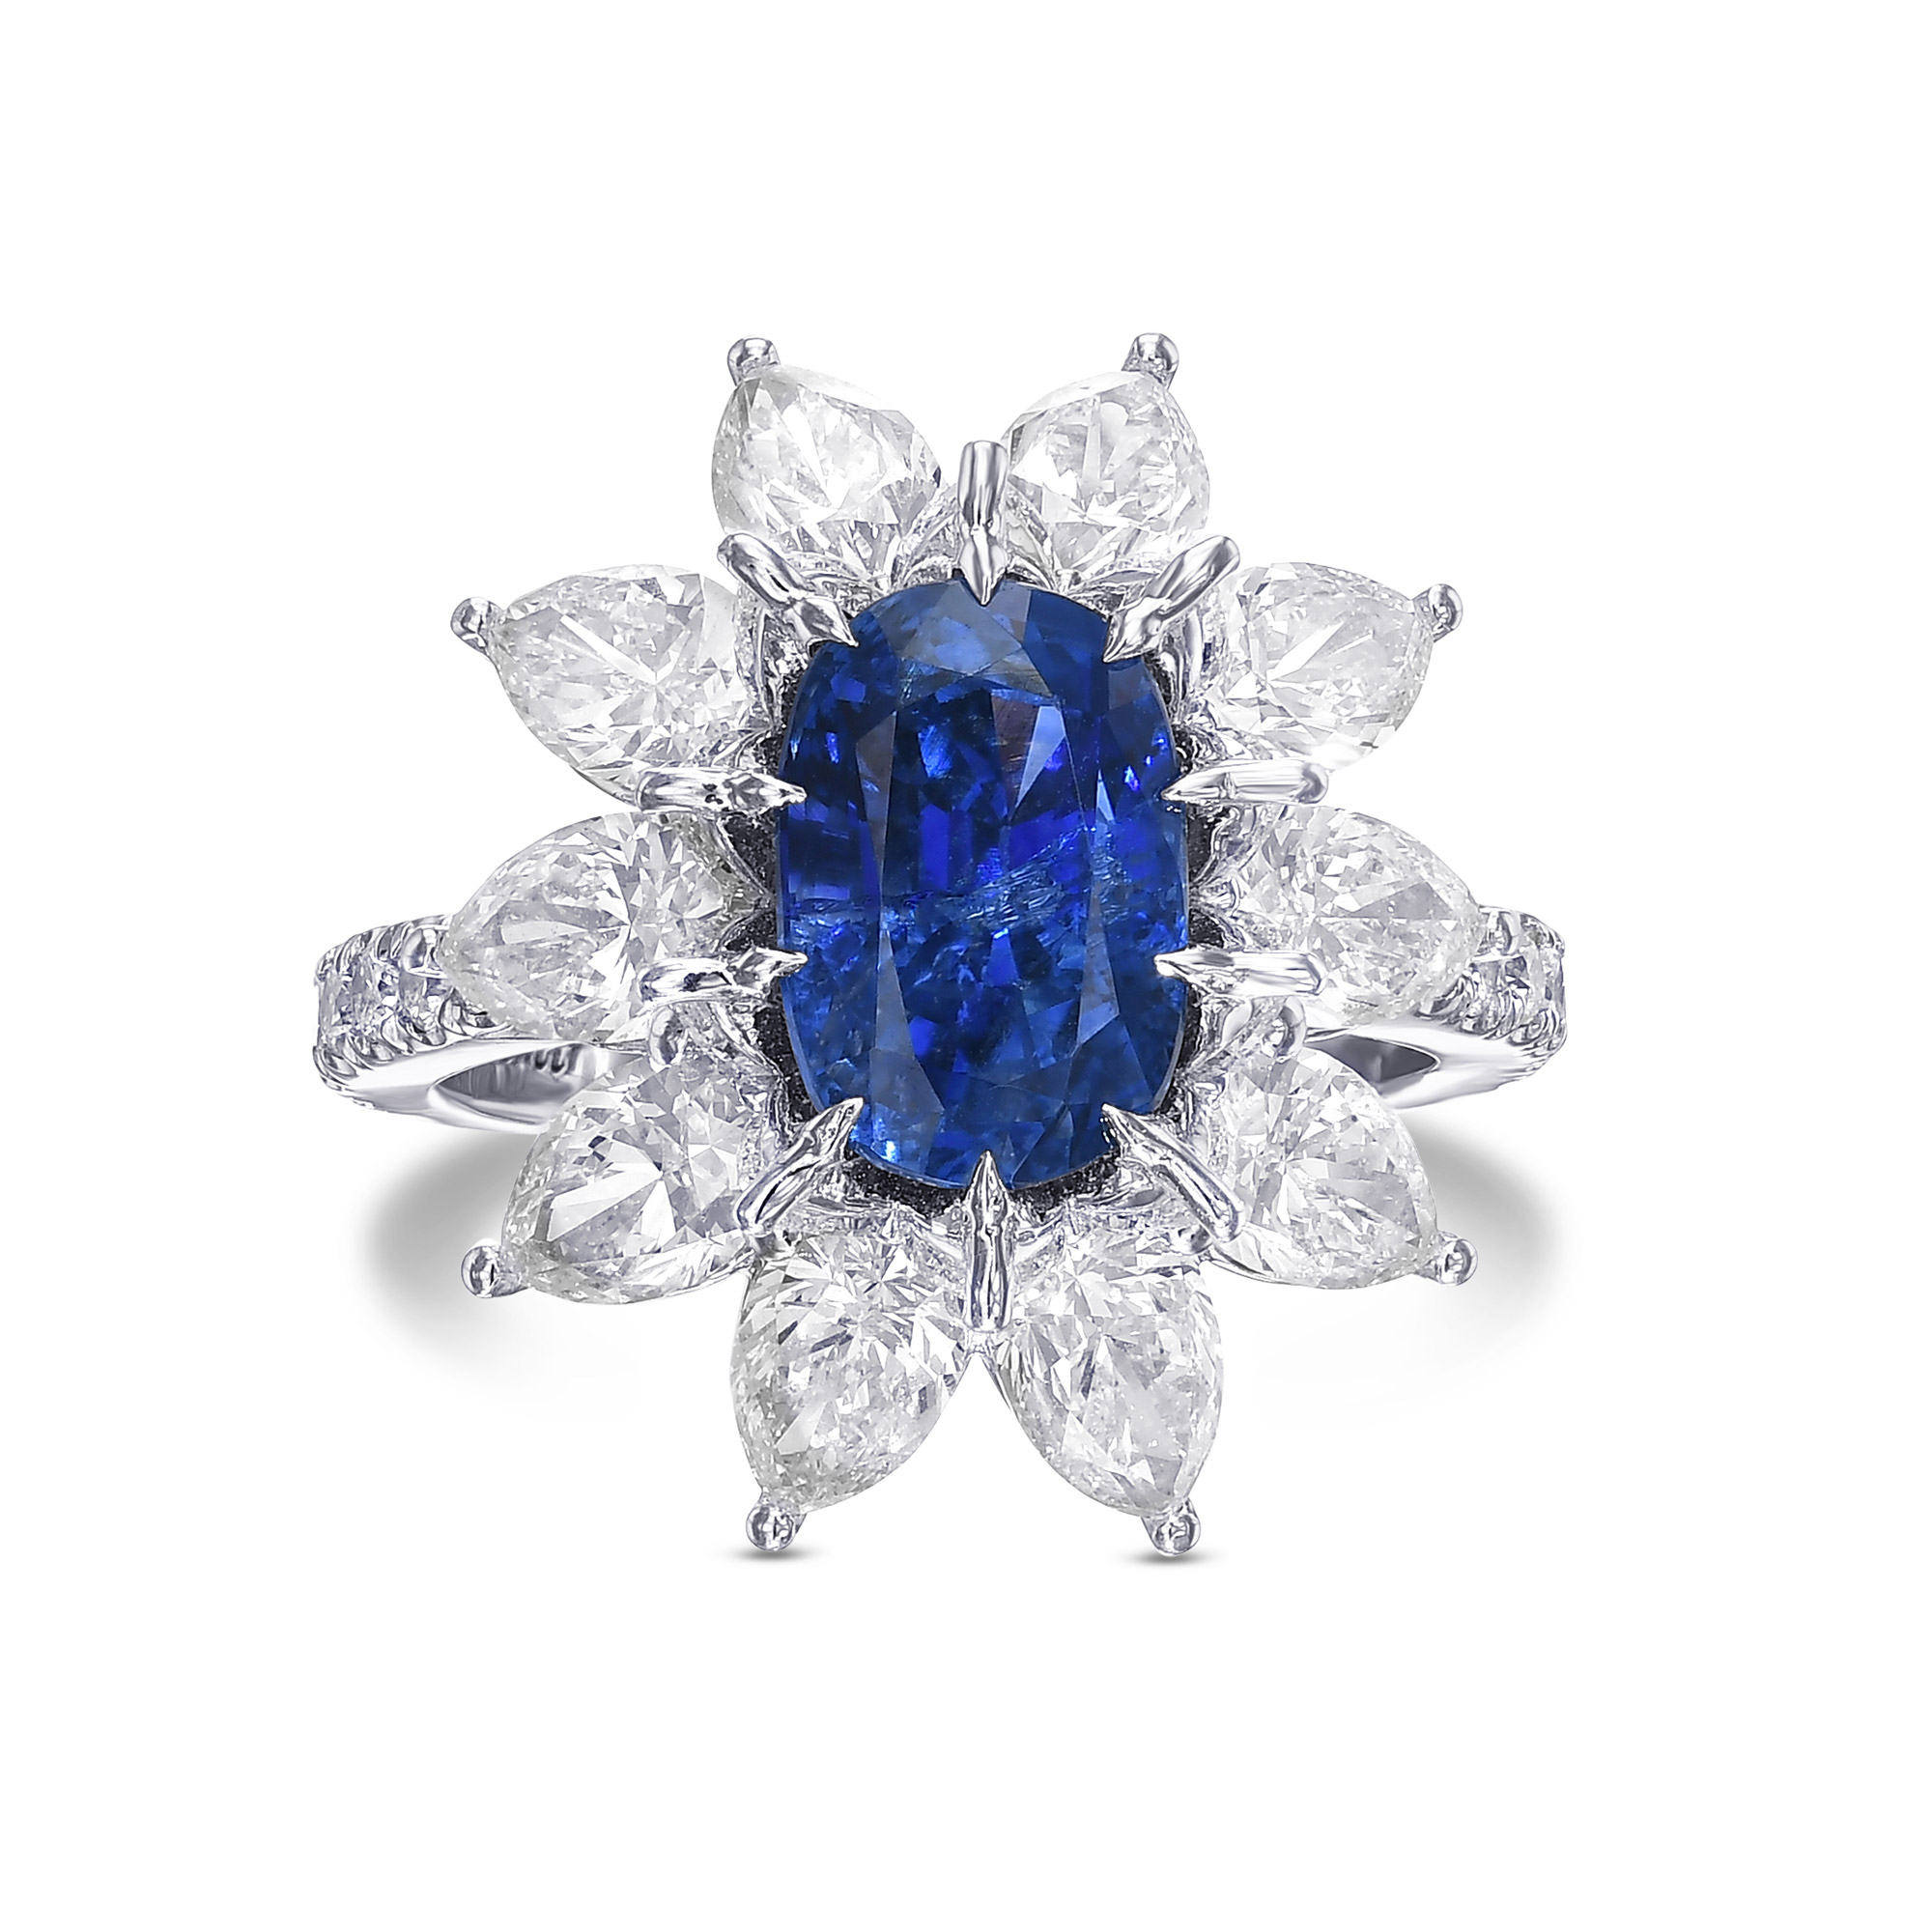 Extraordinary Unheated Kashmir Sapphire and Diamond Halo Ring, SKU 30616M (8.68Ct TW)